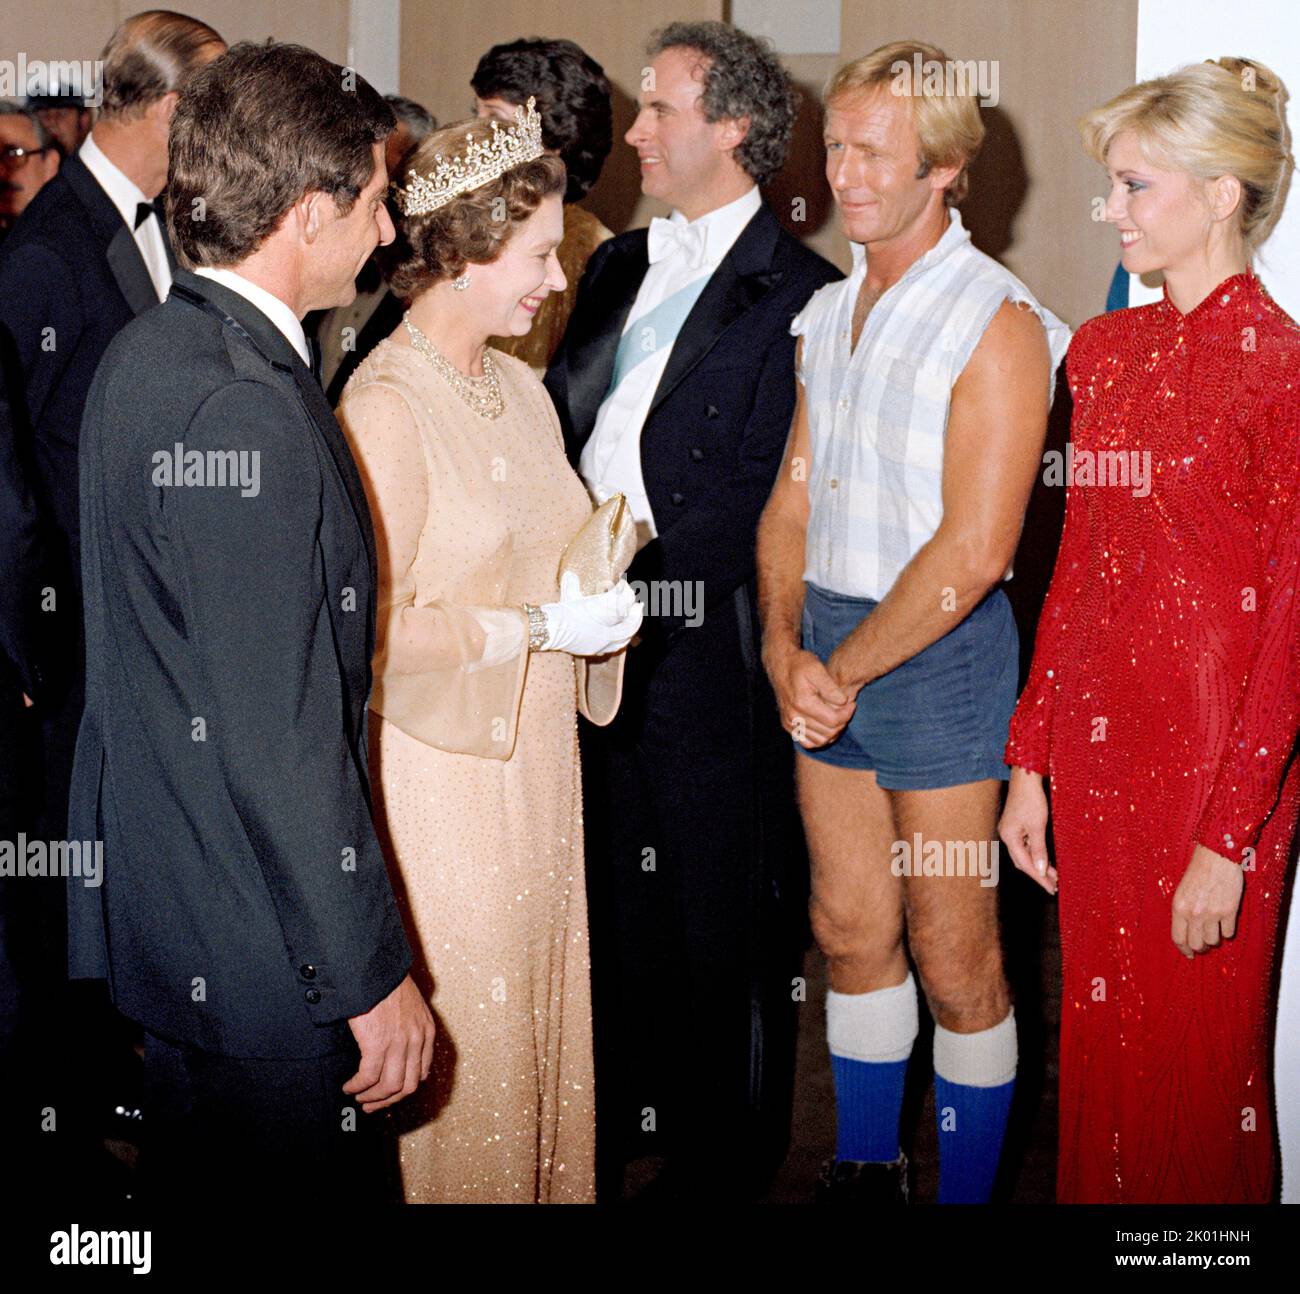 Royal Charity Concert 1980 - Queen Elizabeth II, Paul Hogan (Crocodile Dundee actor), Olivia Newton-John (Saturday Night Fever). Stock Photo